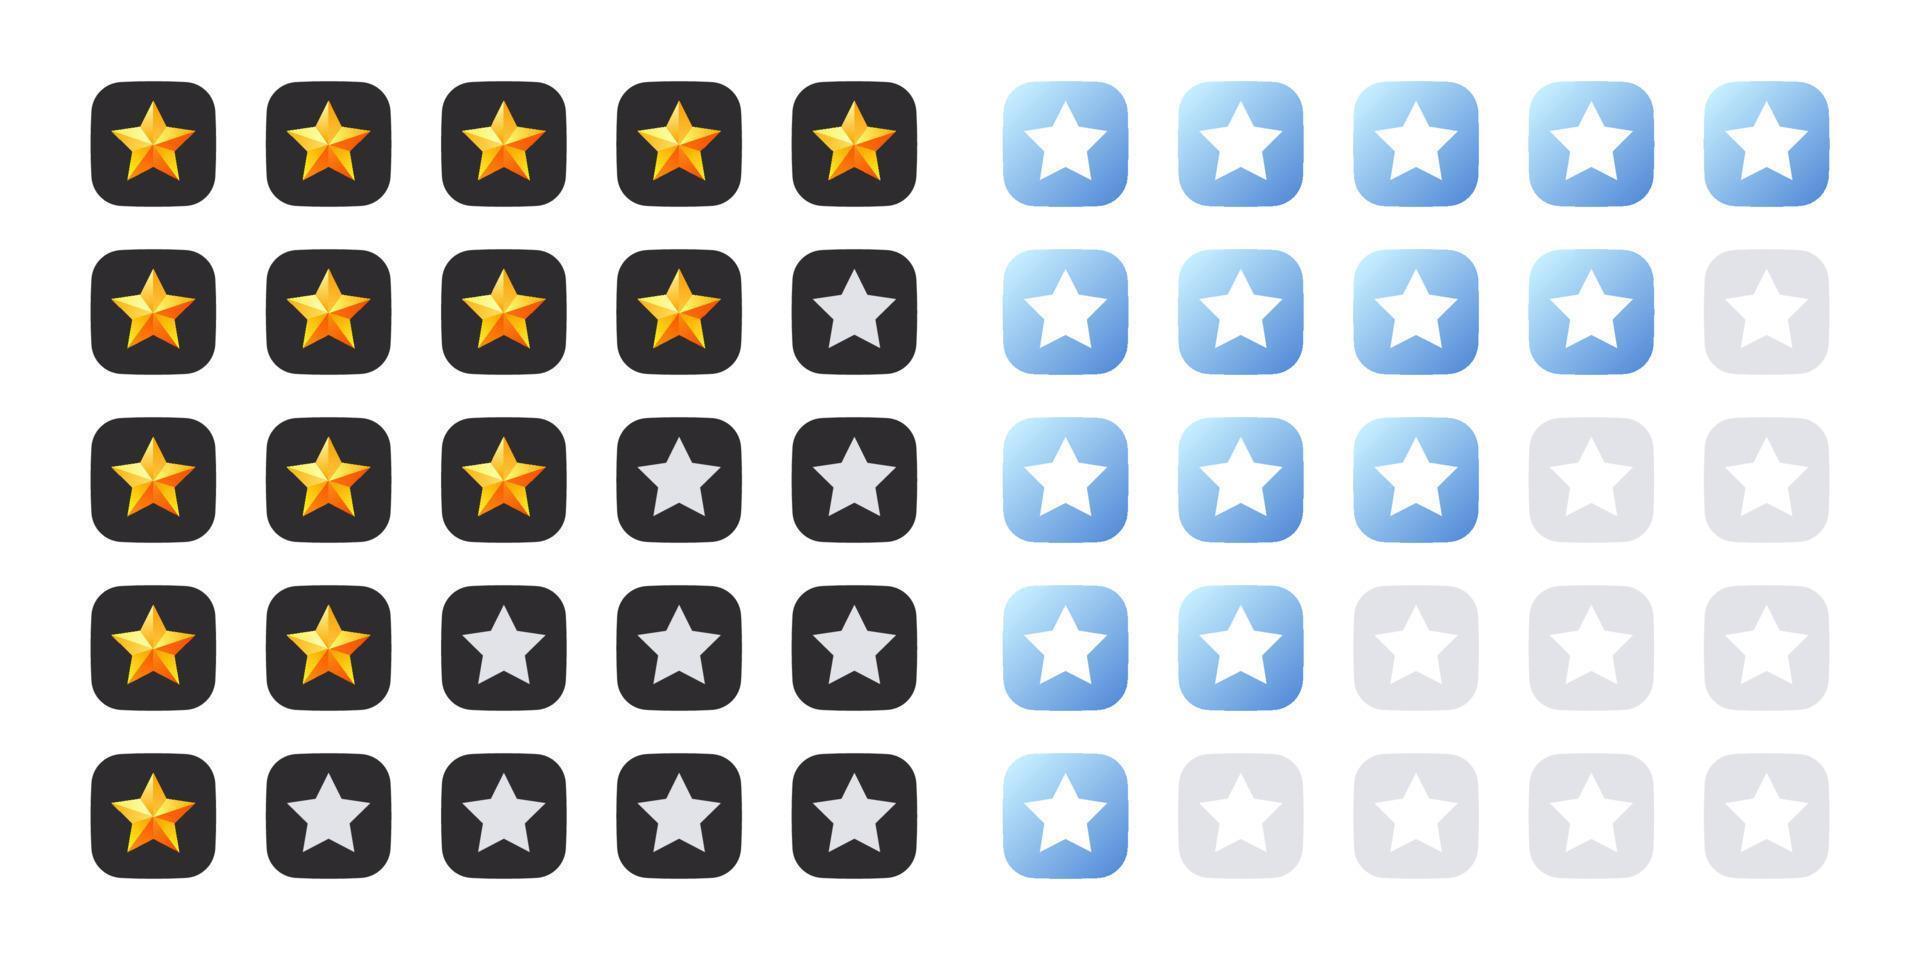 Customer satisfaction 5 star icon. Stars collection. Feedback concept. Vector illustration